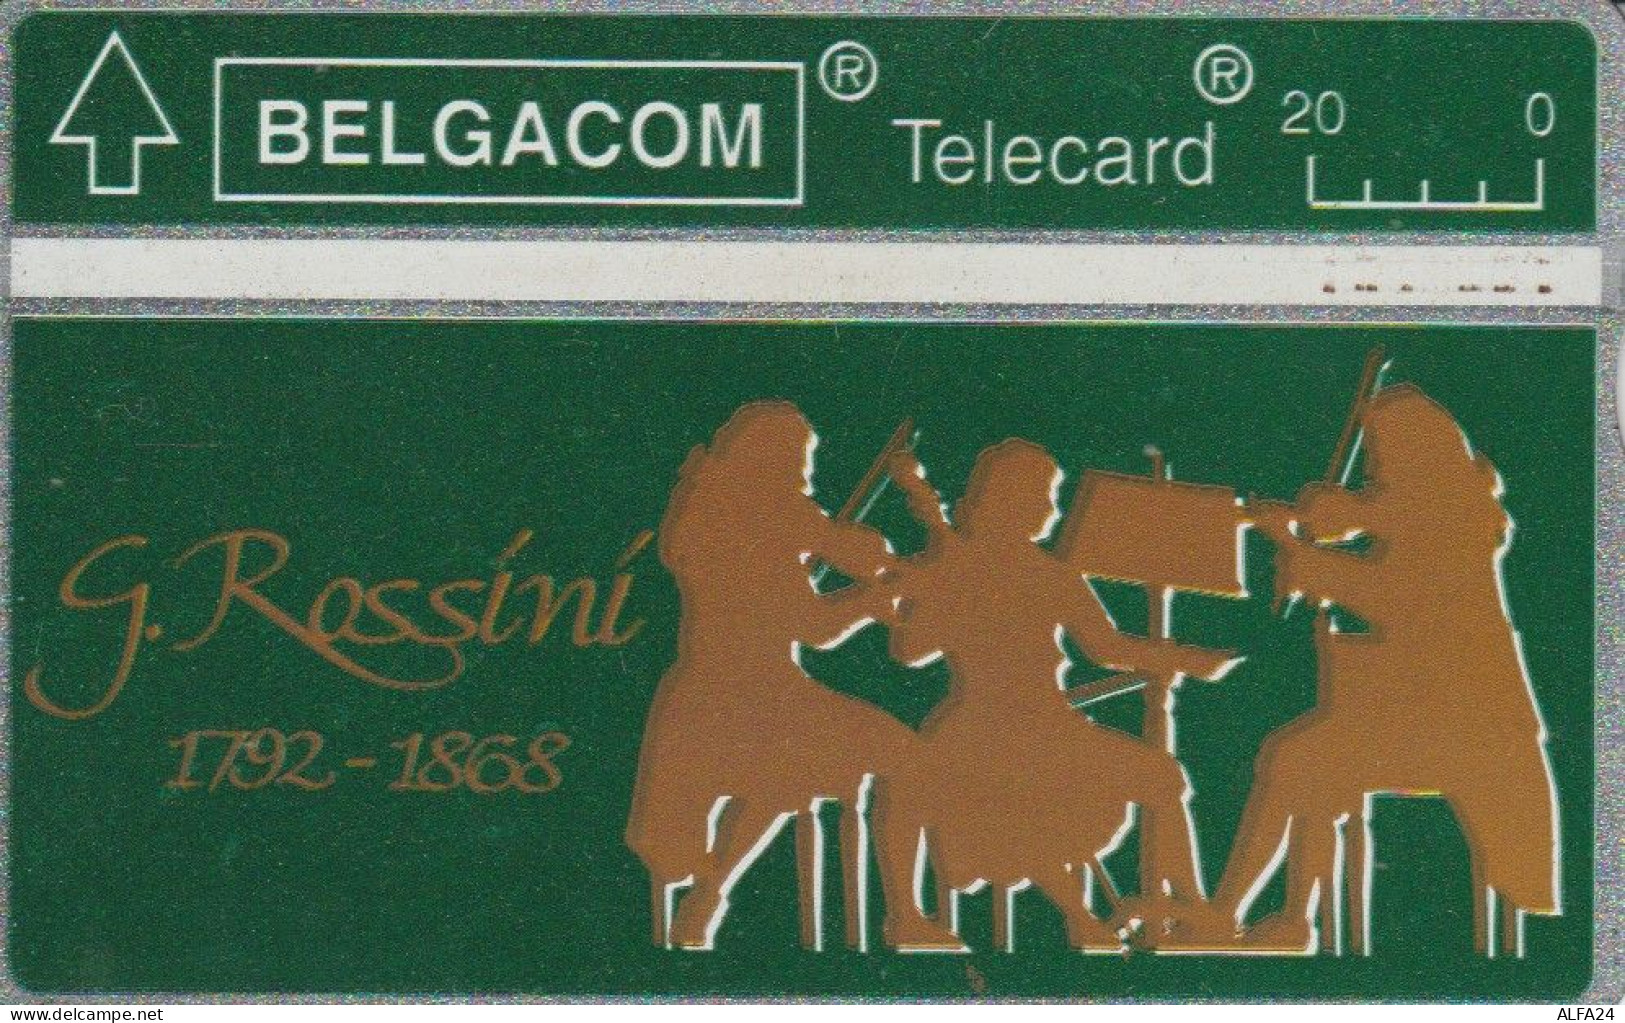 PHONE CARD BELGIO LANDIS (CK6009 - Senza Chip